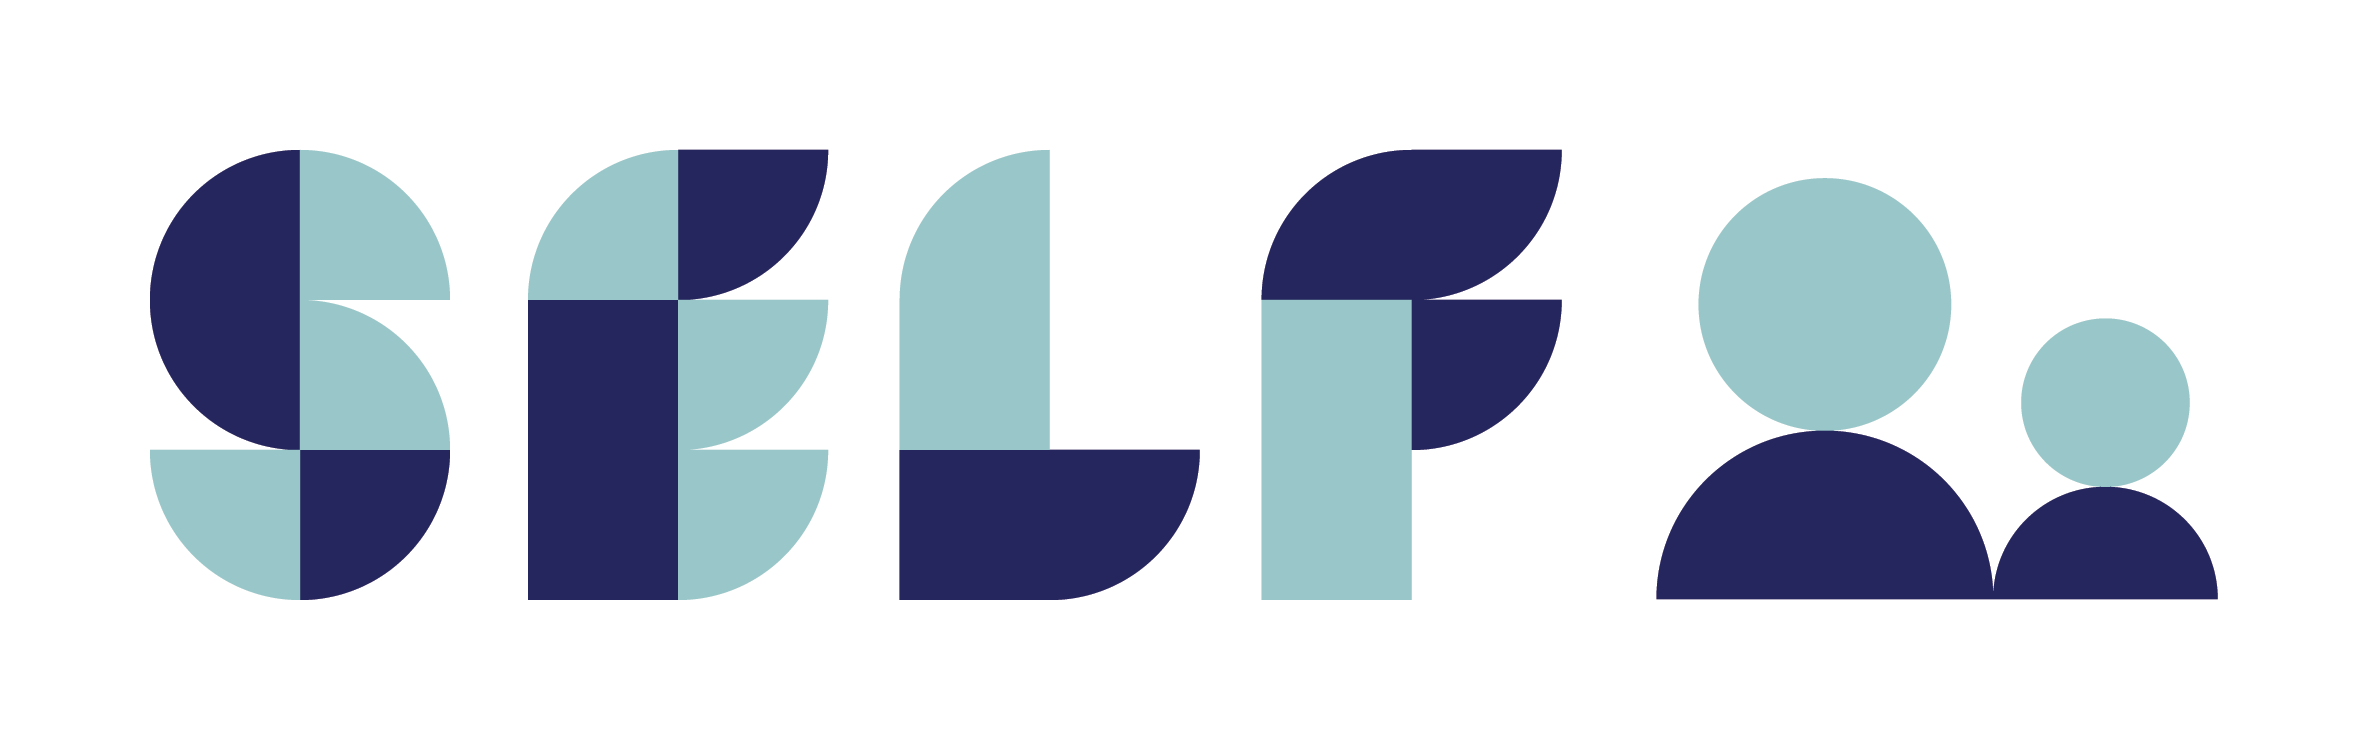 SELF Logo